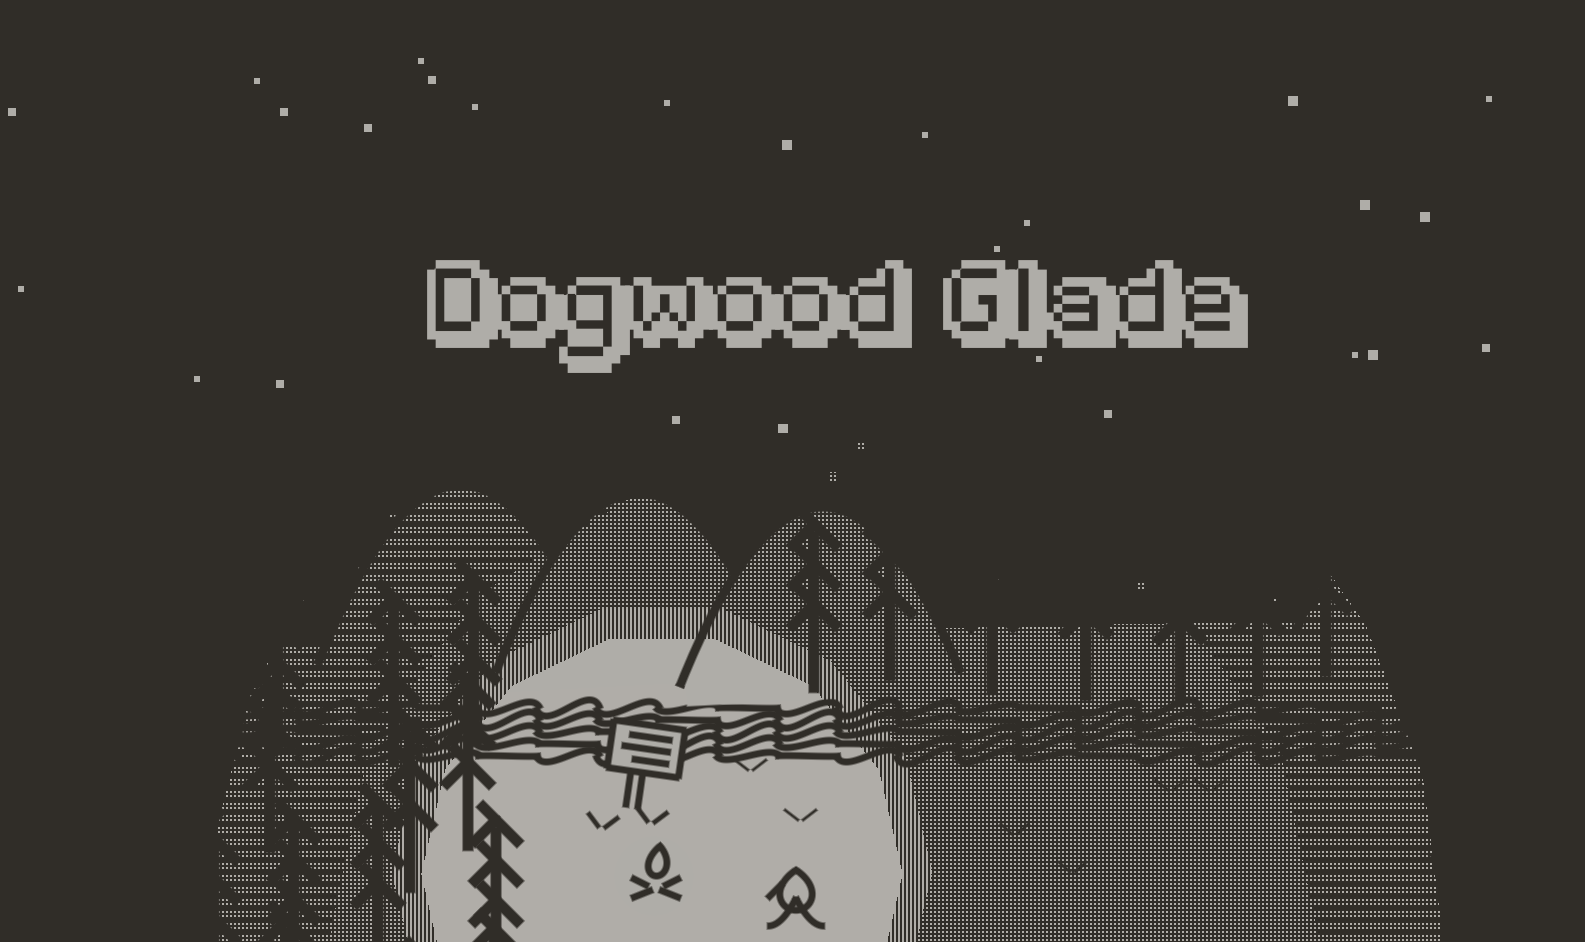 Dogwood Glade